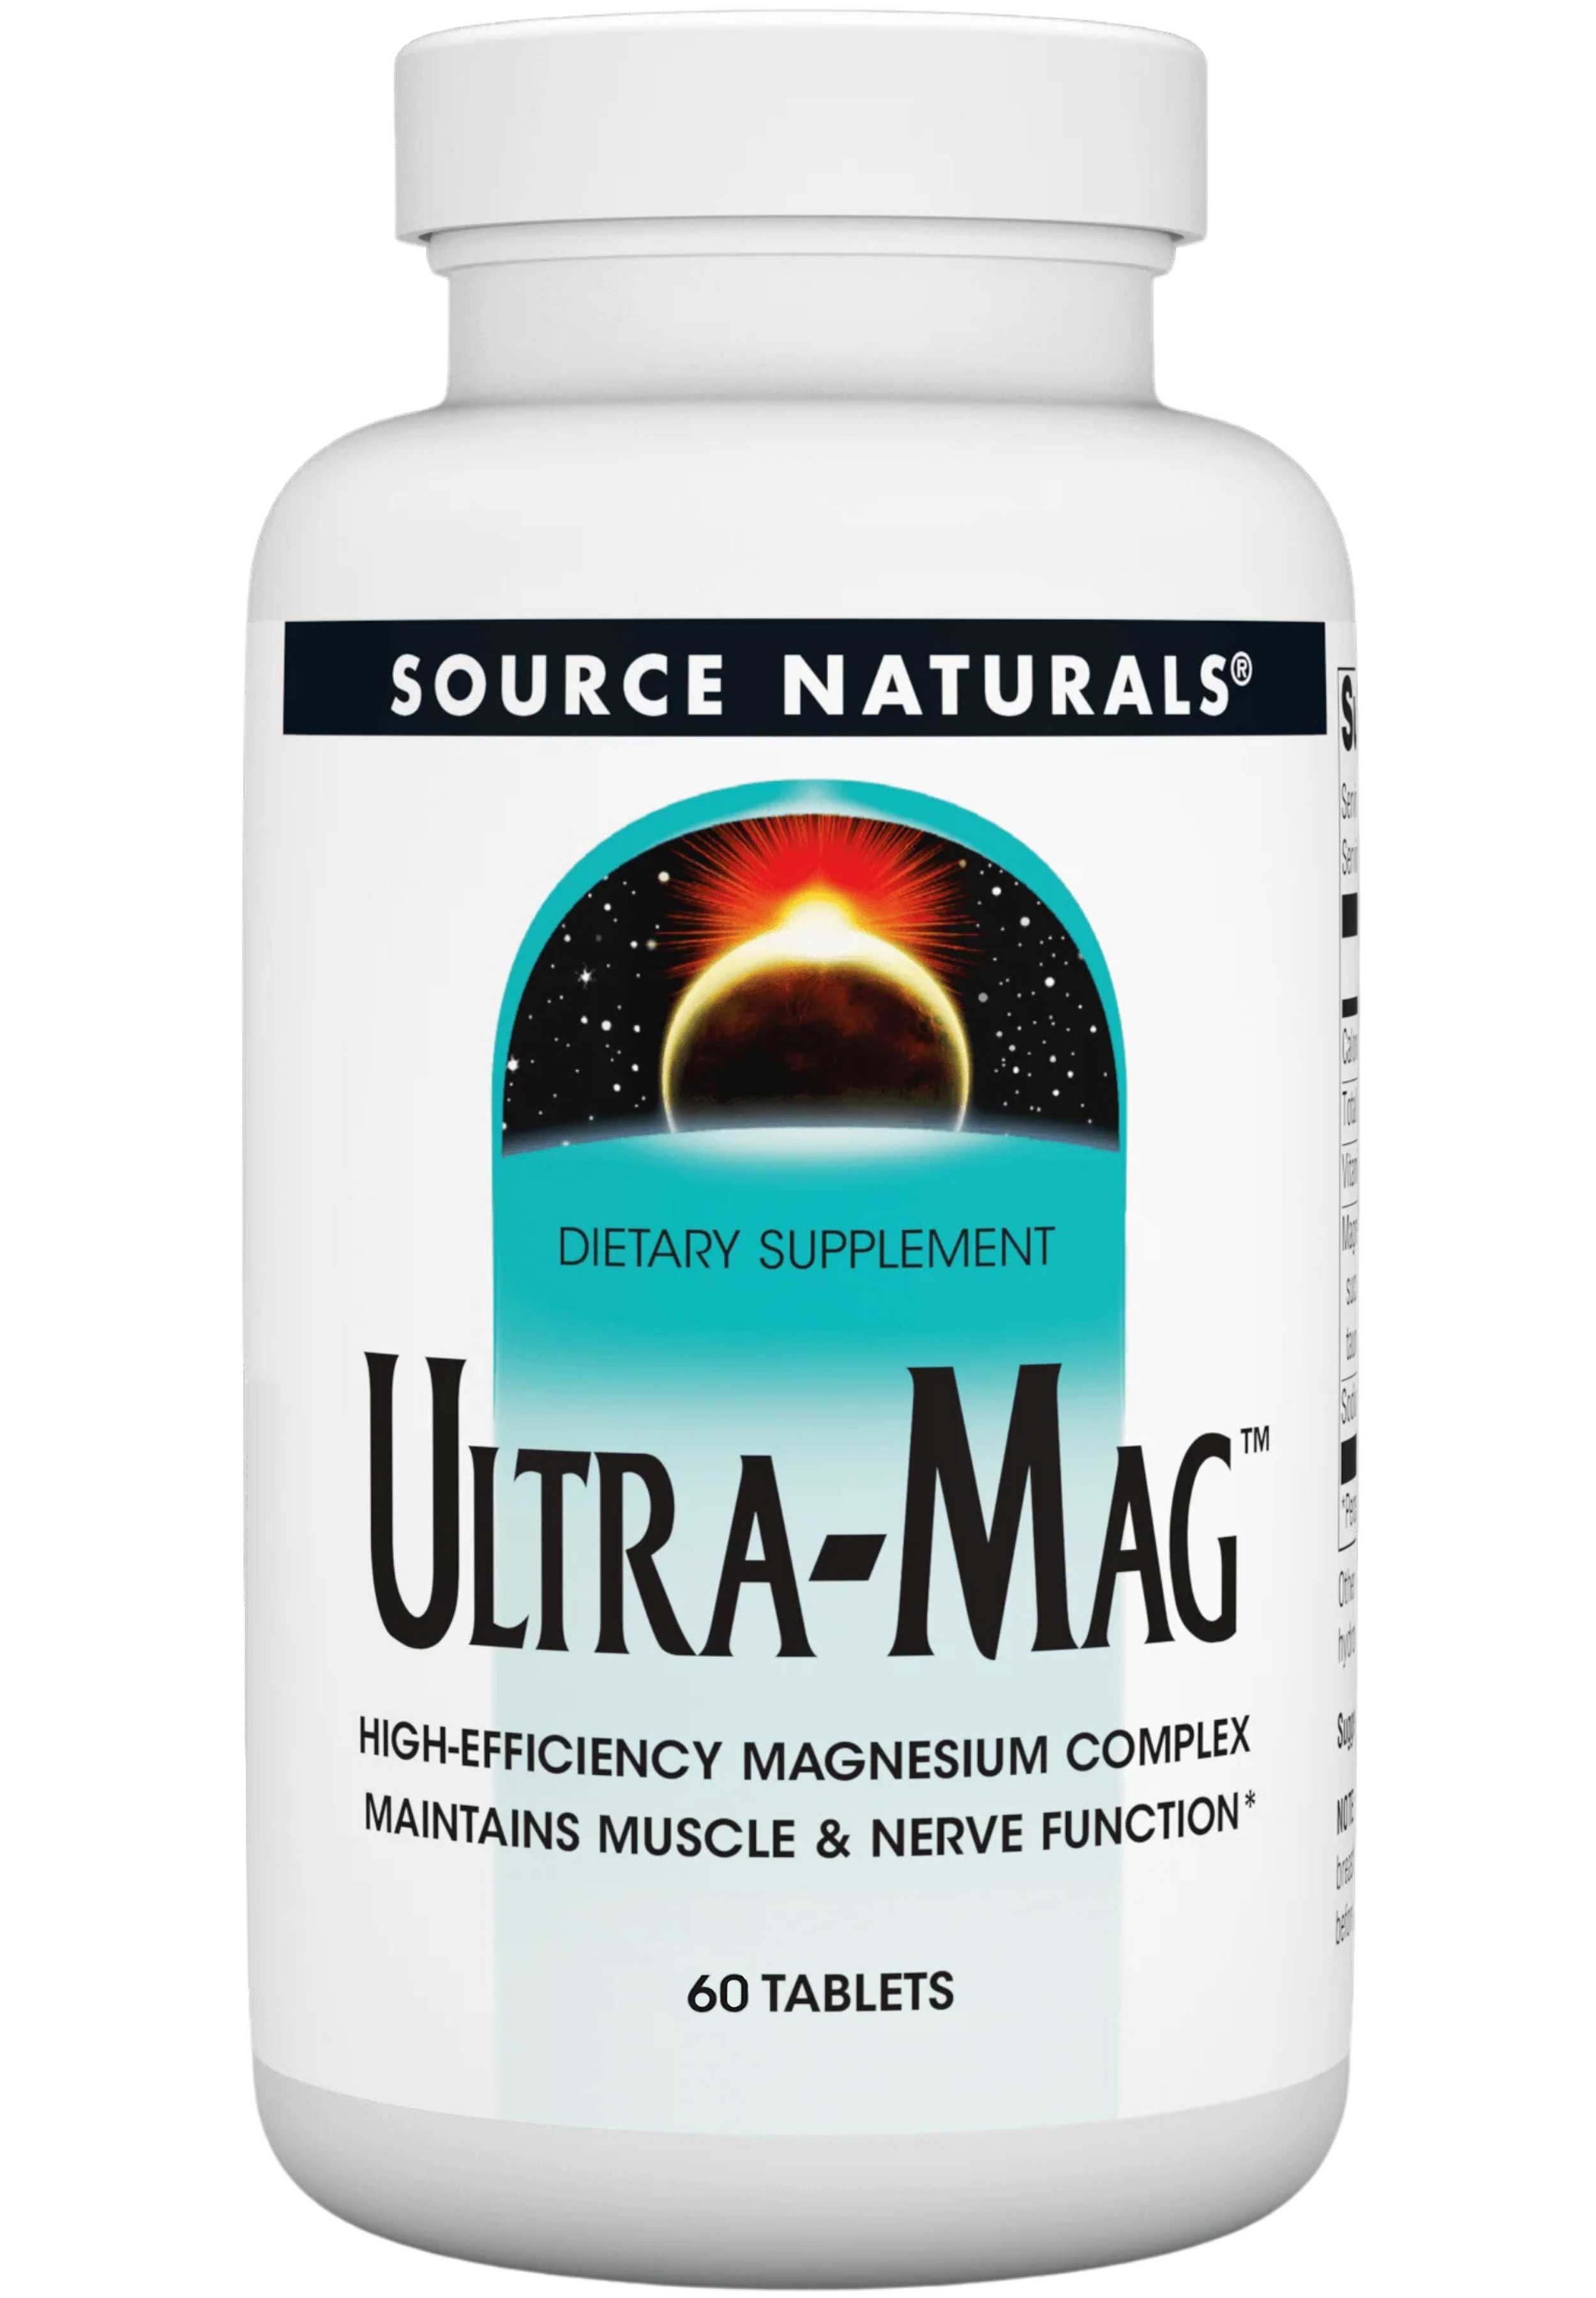 Source Naturals Ultra Mag™